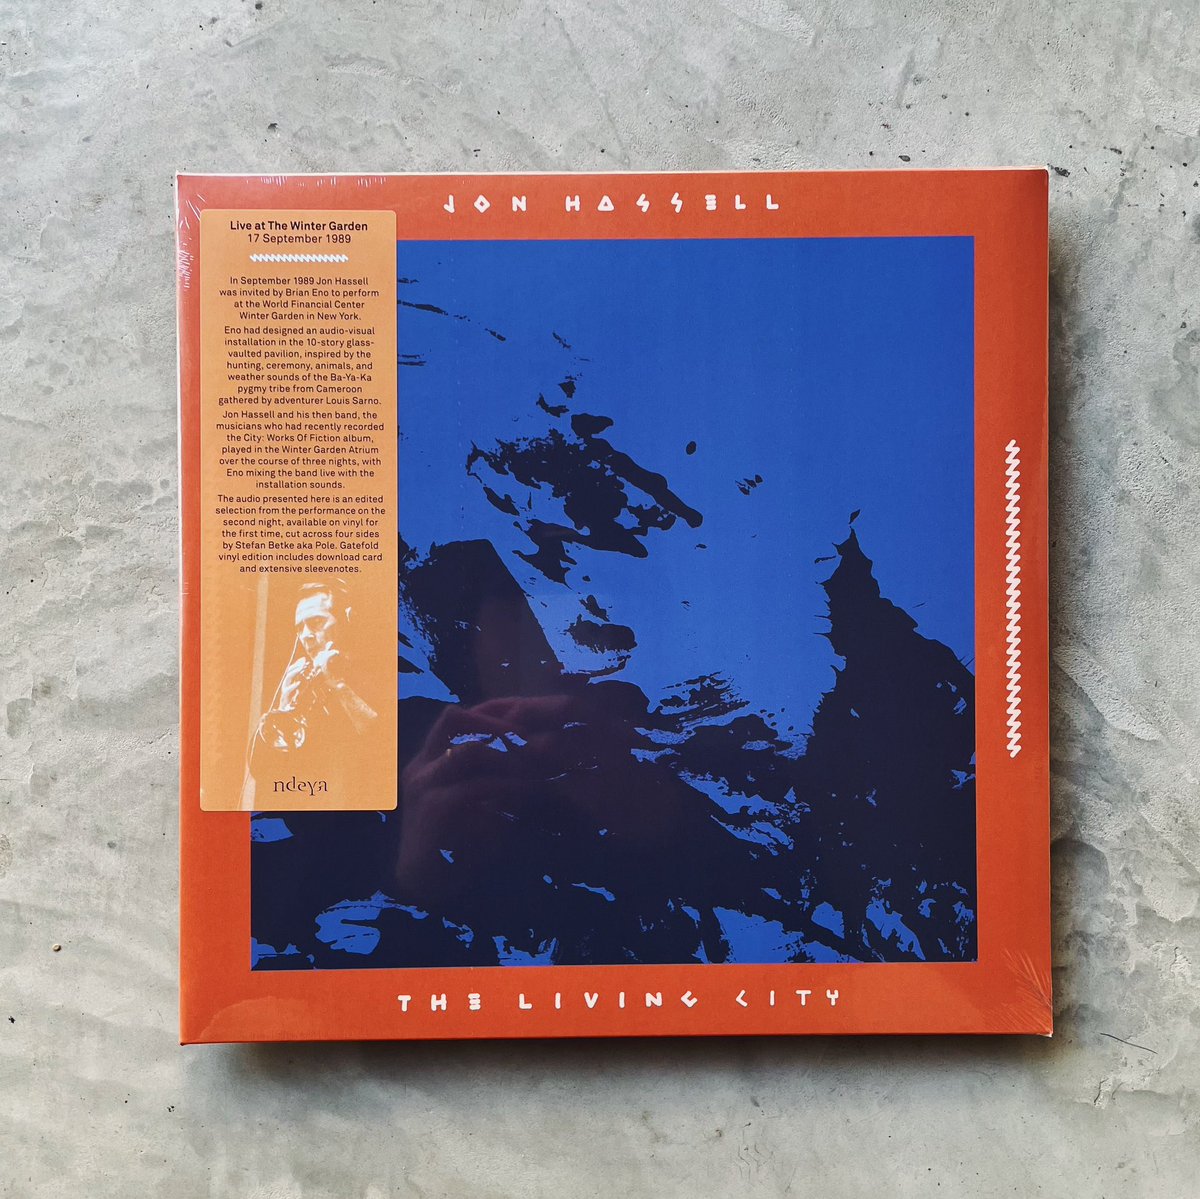 Jon Hassell – The Living City [Live at the Winter Garden 17 September 1989] [2LP] harunoame.com/product/jon-ha…